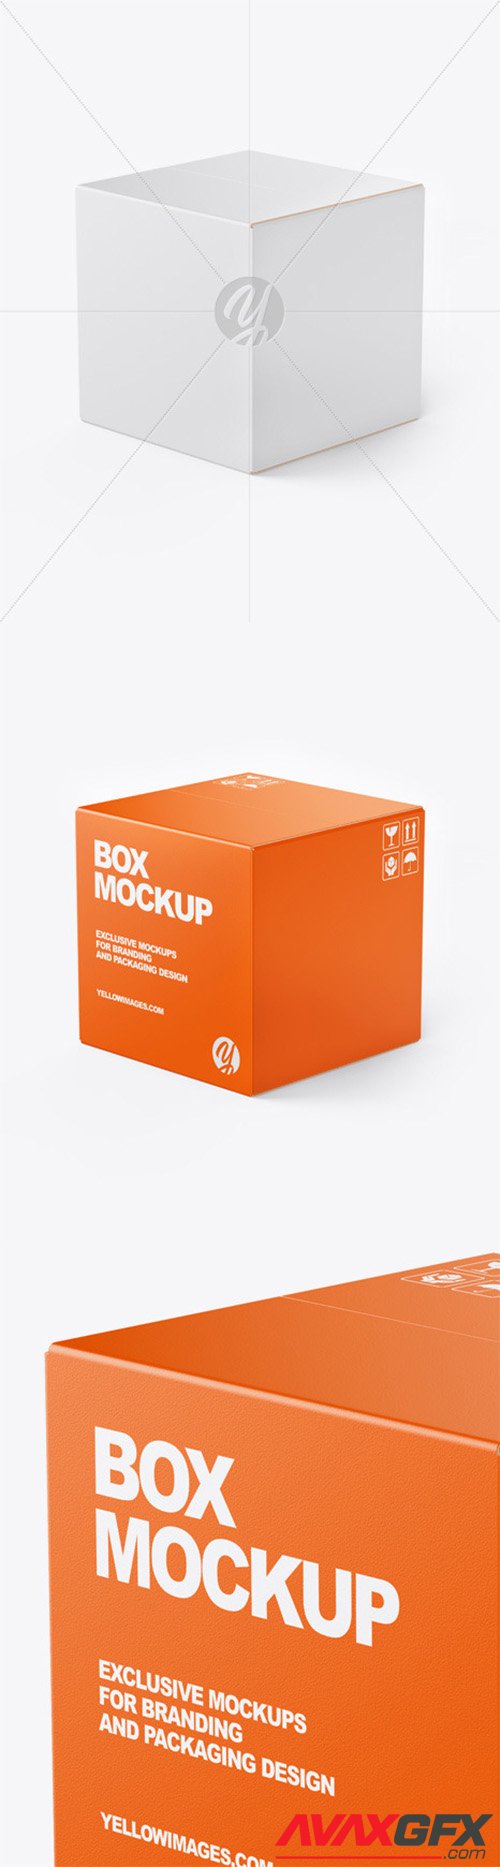 Paper Box Mockup 51222